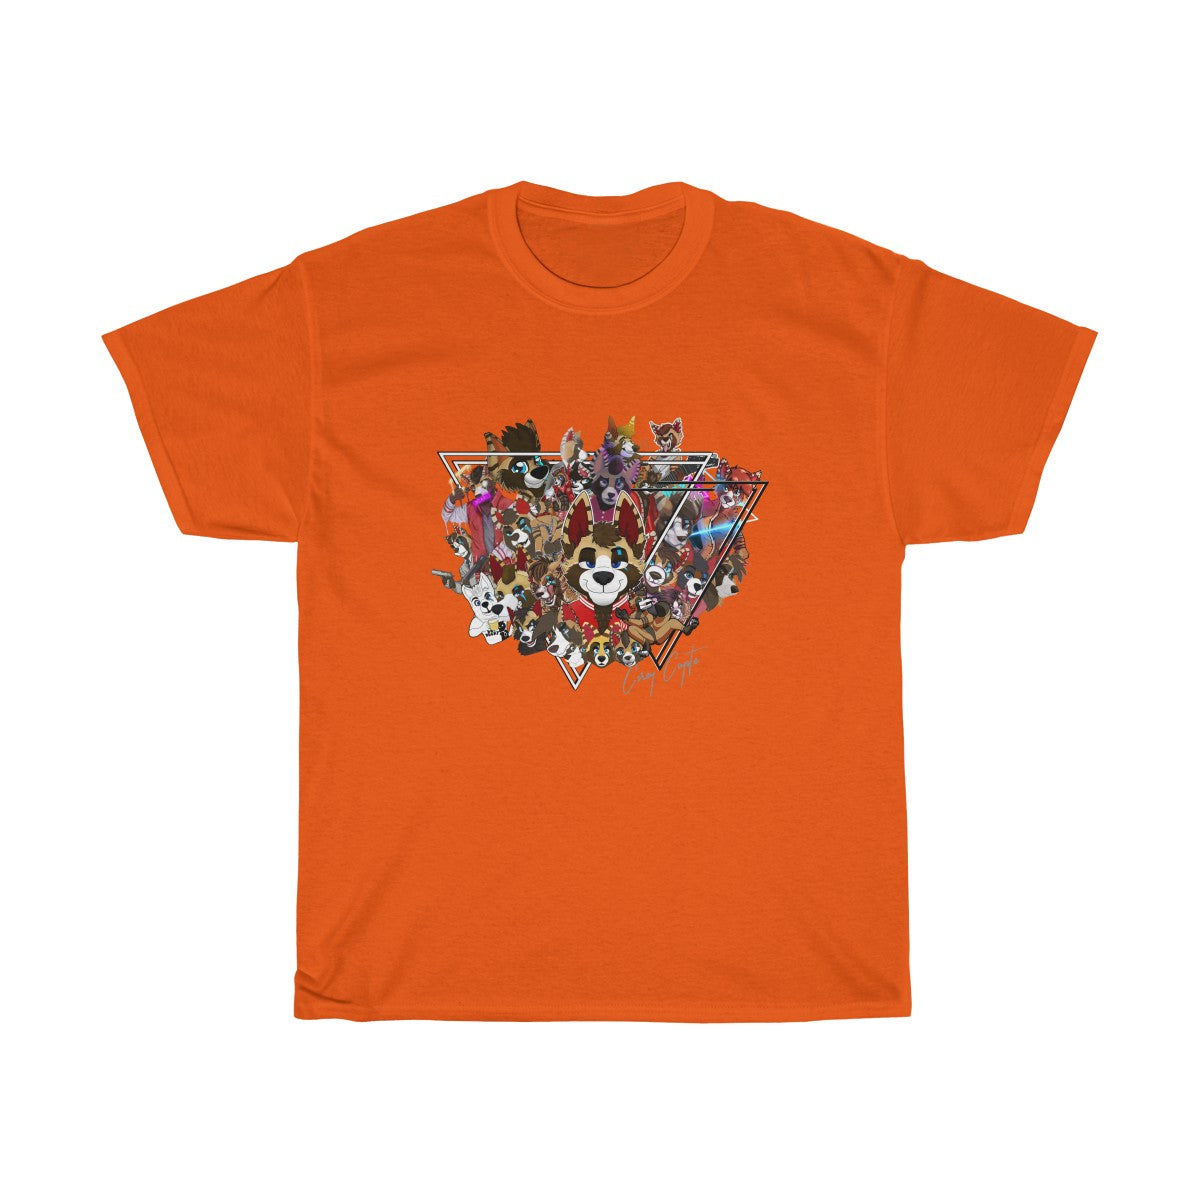 For The Fans - T-Shirt T-Shirt Corey Coyote Orange S 